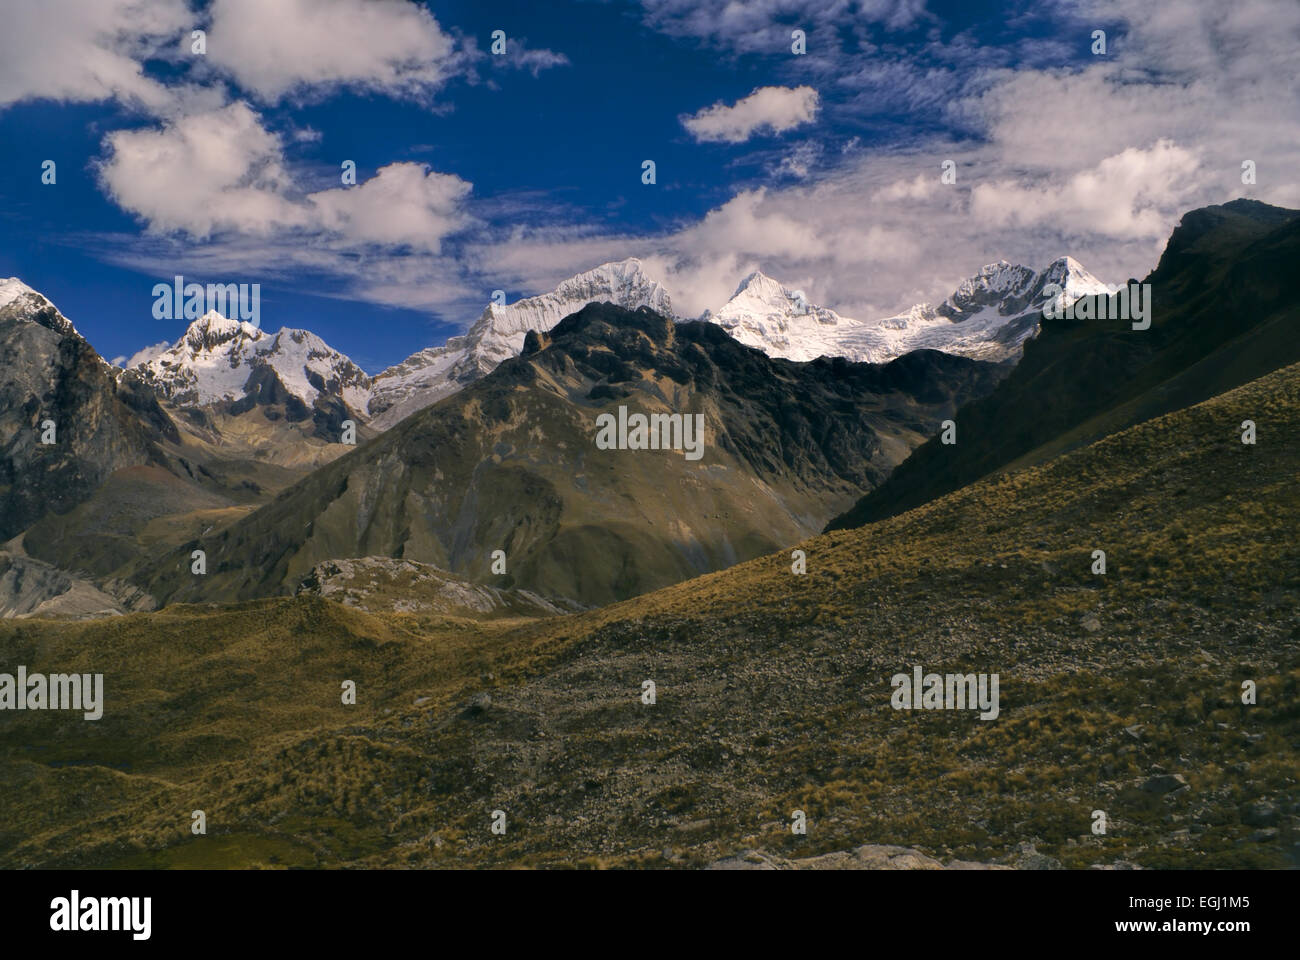 Amazing landscape around Alpamayo, one of highest mountain peaks in Peruvian Andes, Cordillera Blanca Stock Photo